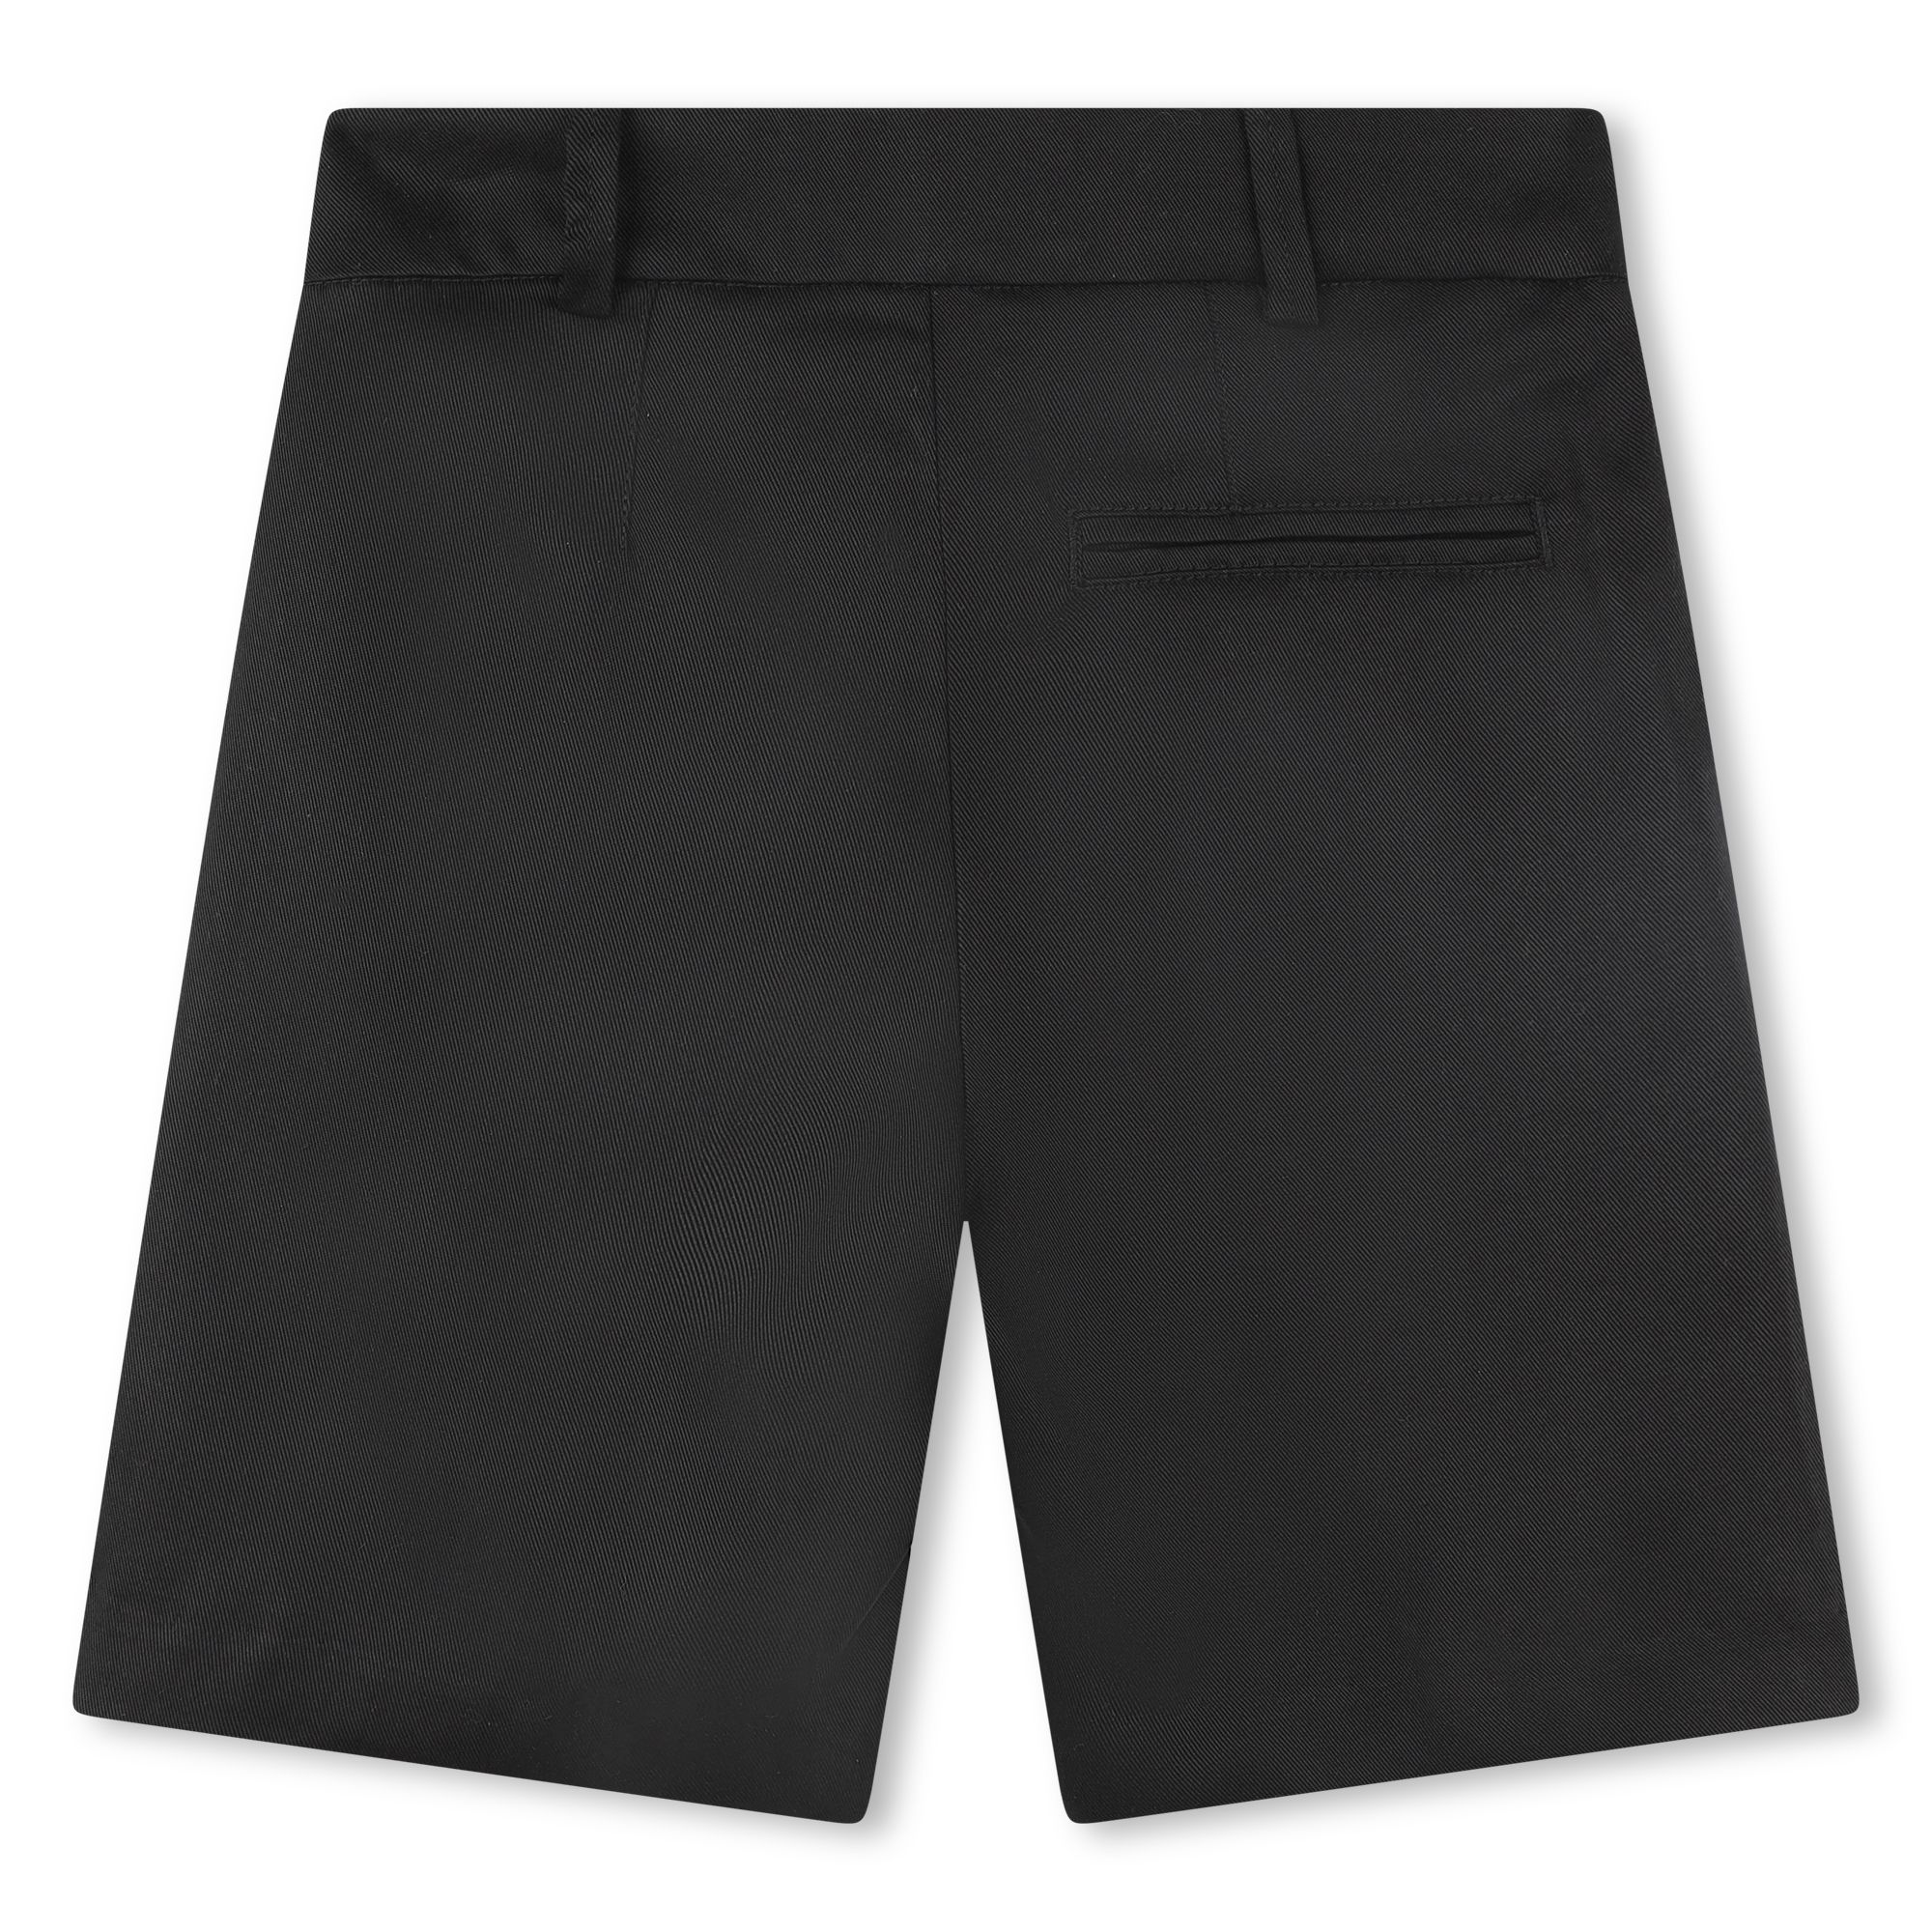 Bermuda shorts with pockets KARL LAGERFELD KIDS for BOY